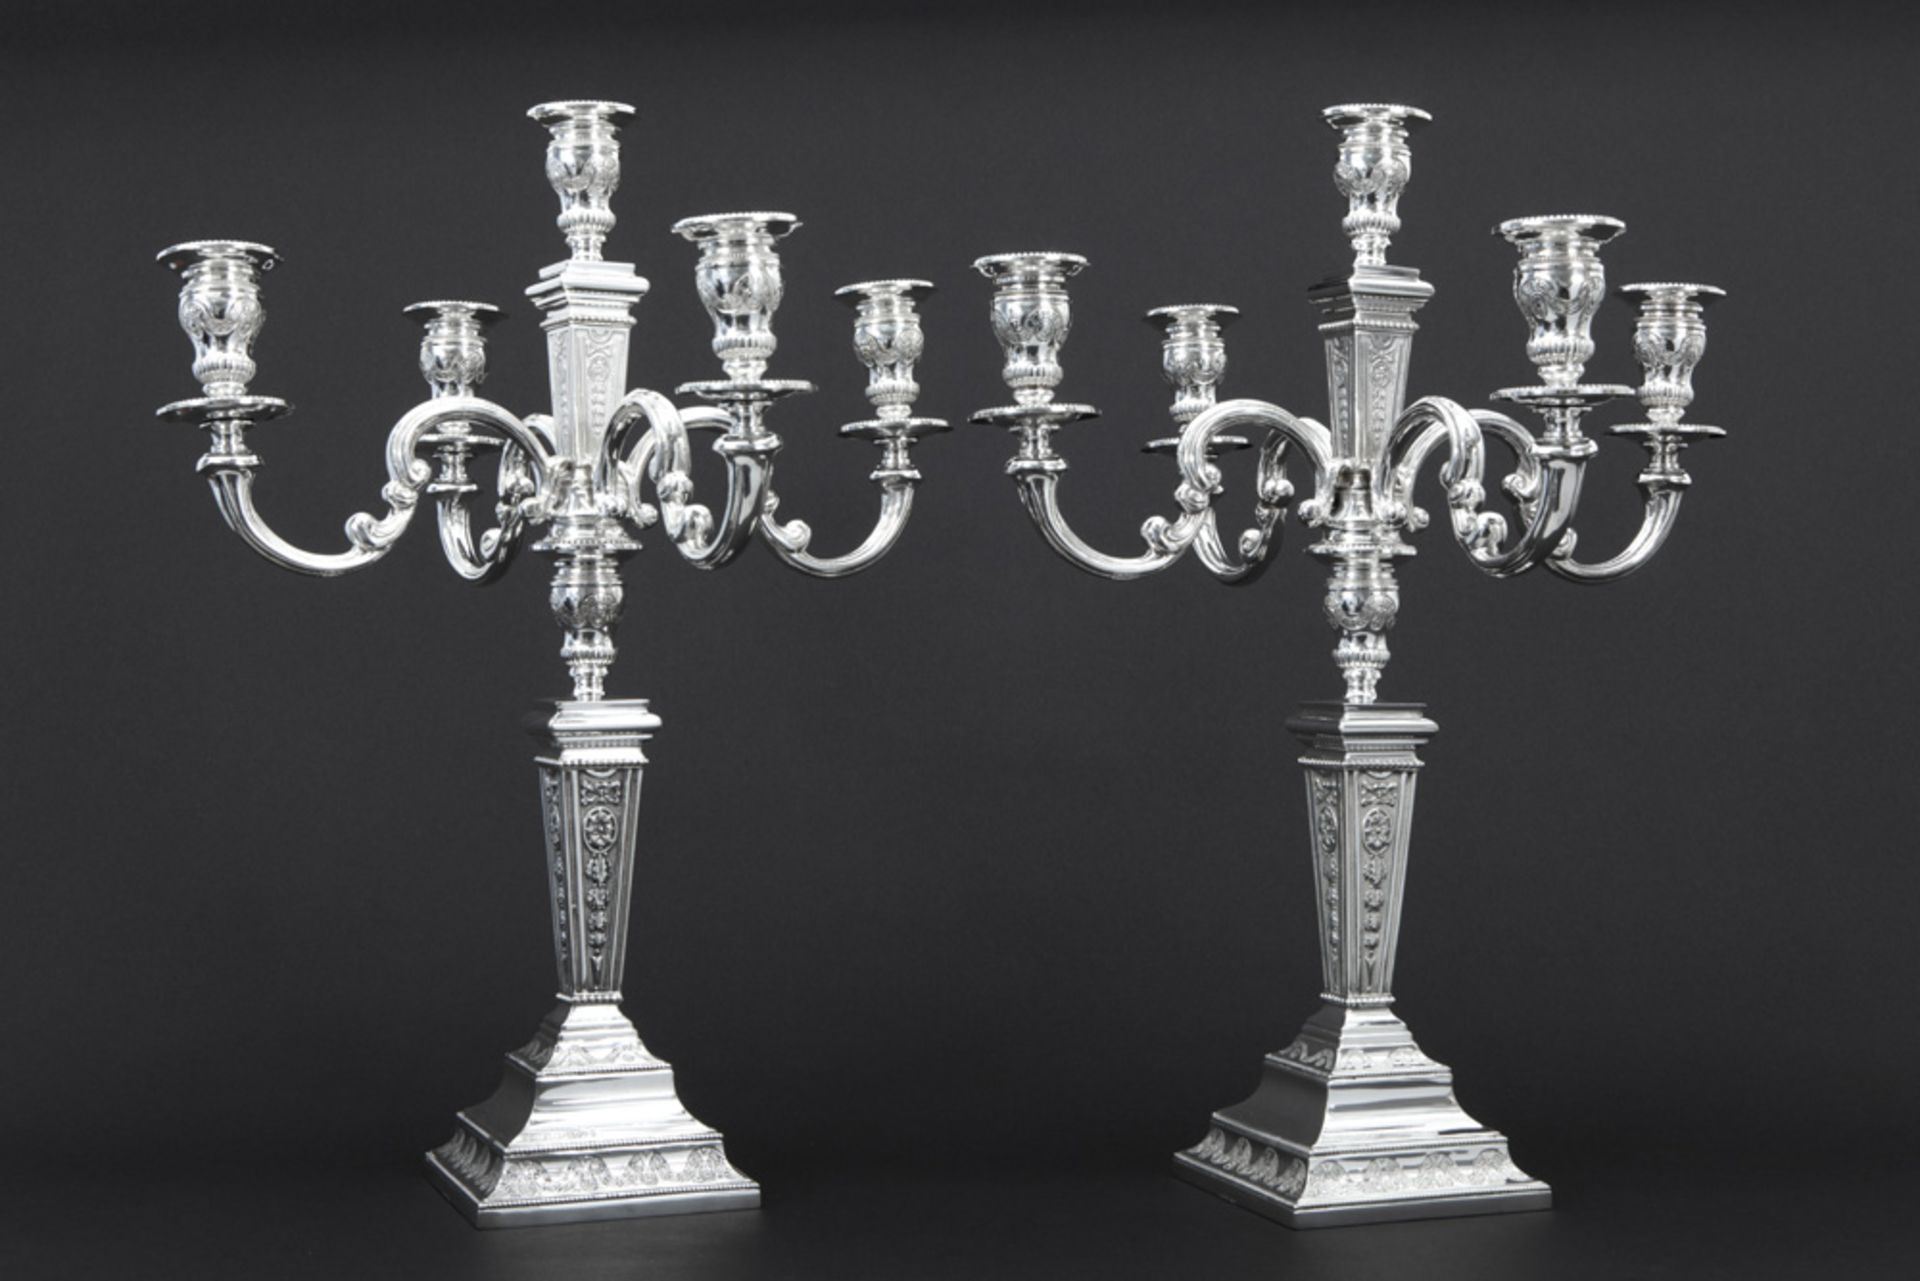 pair of neoclassical candelabras in marked silver||Mooi paar neoclassicistische tafelkandelaars in